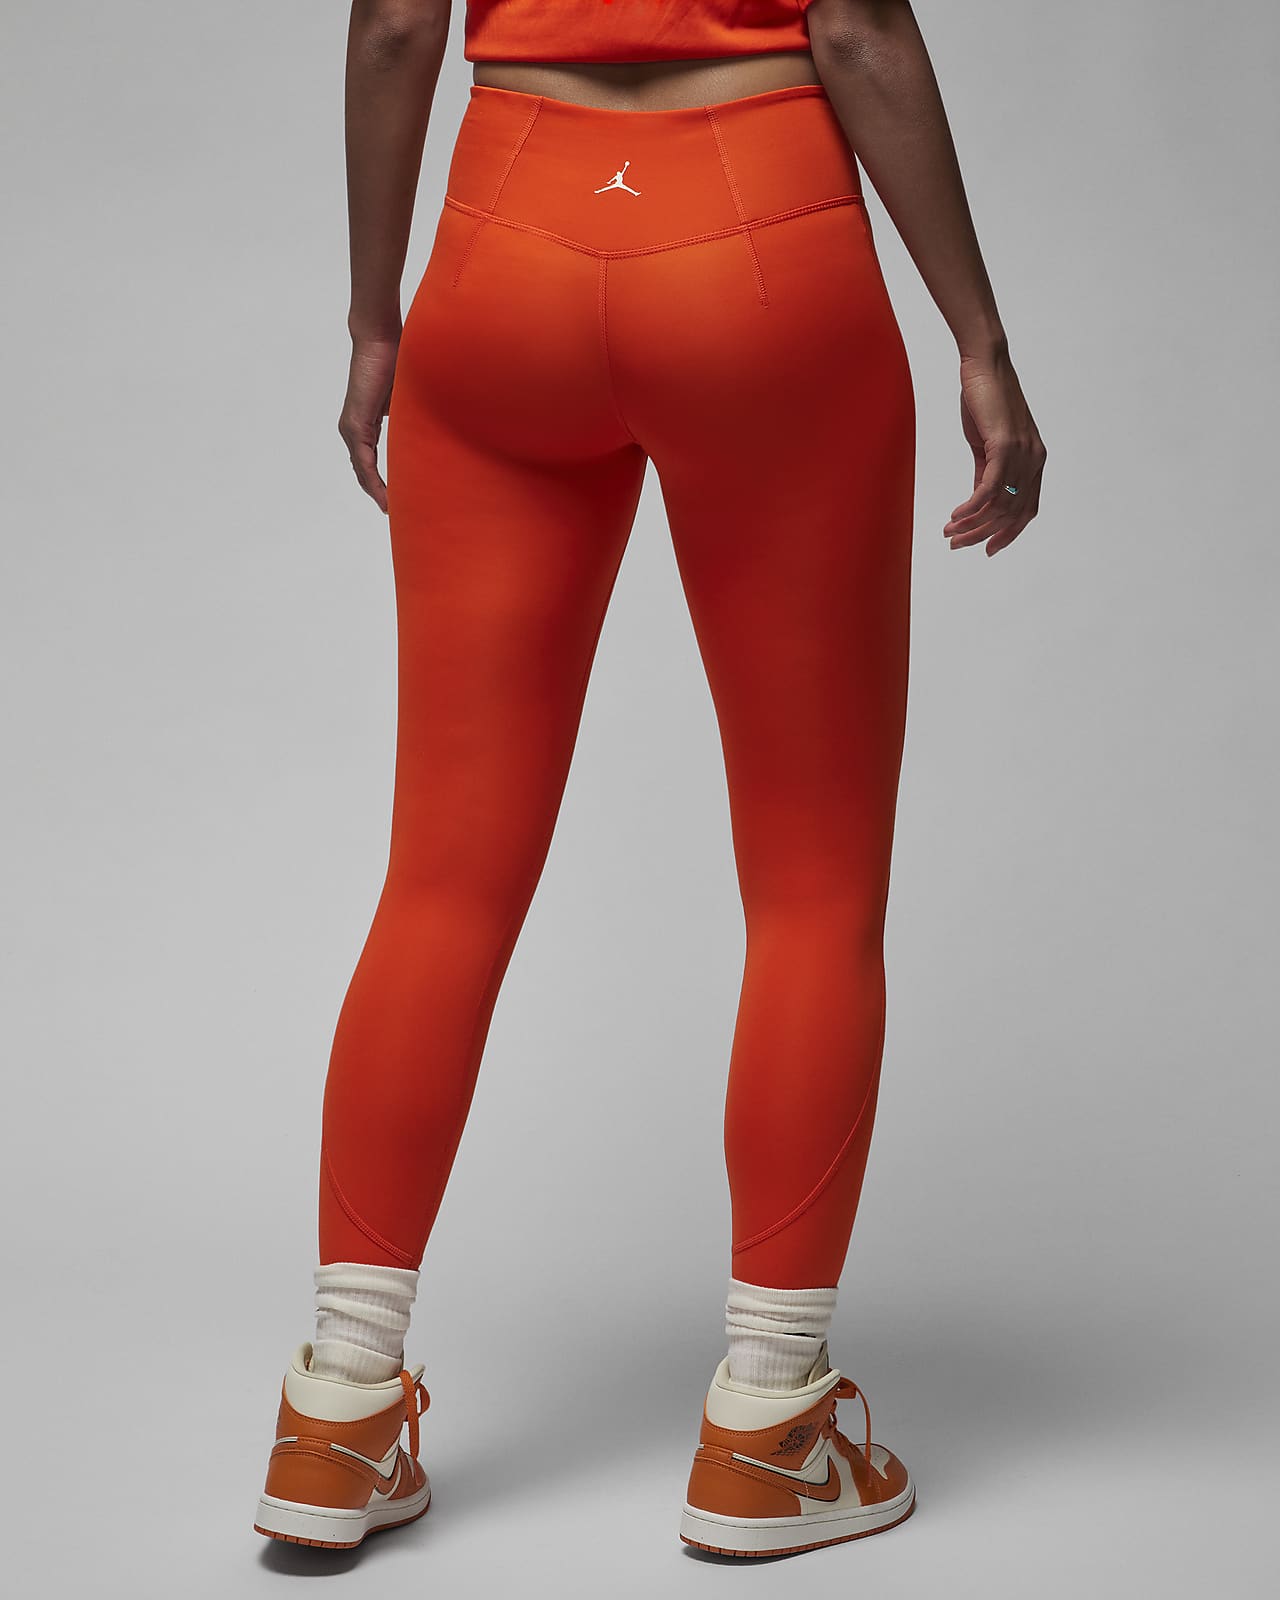 Jordan Sport legging voor dames. Nike BE